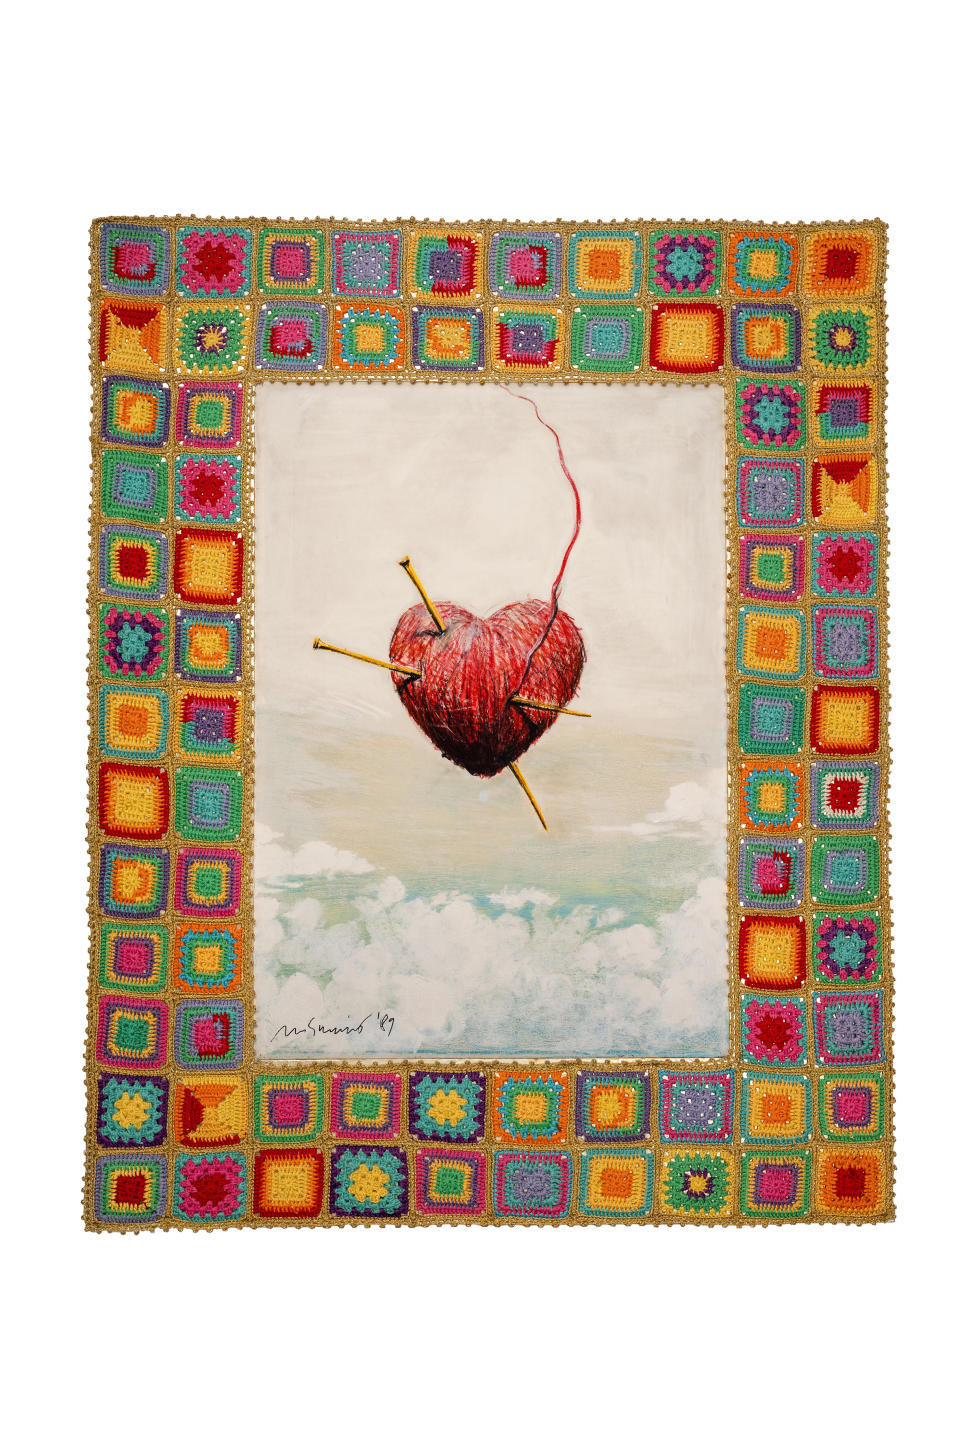 Franco Moschino's "Heart of wool" artwork chosen by Gabriella Karefa-Johnson.